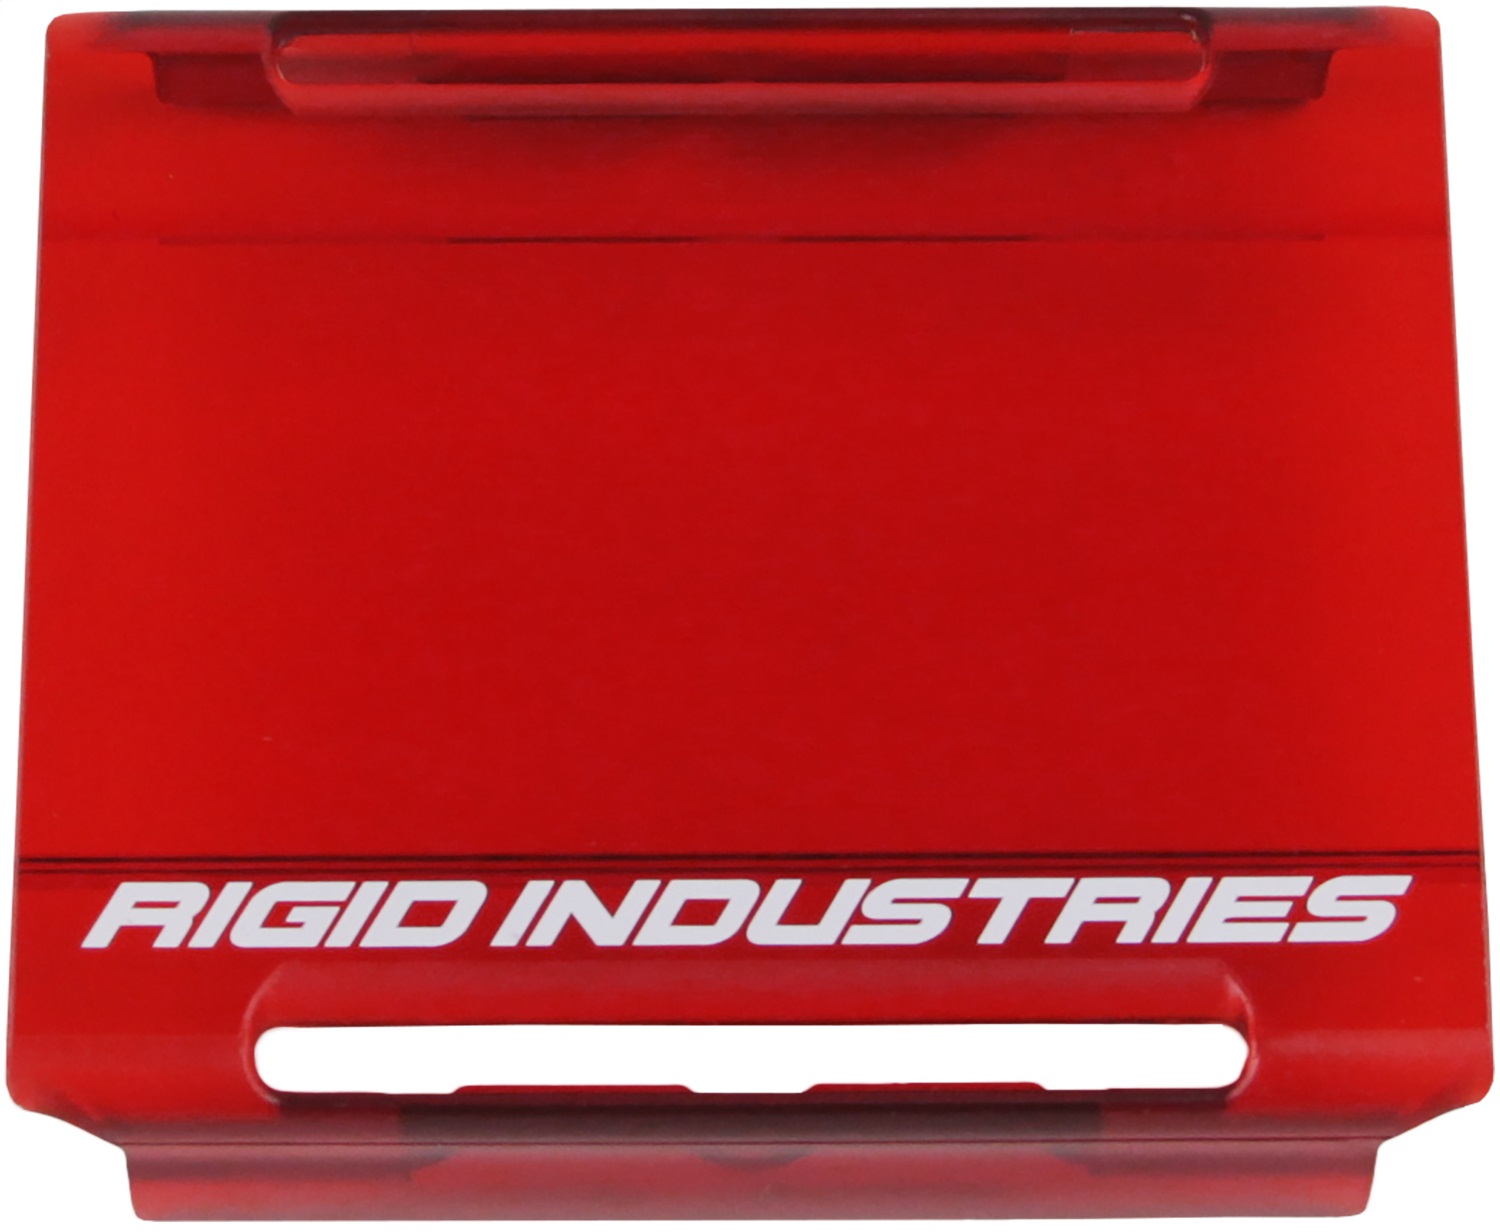 Rigid Industries Rigid Industries 10495 EM Series; Light Cover